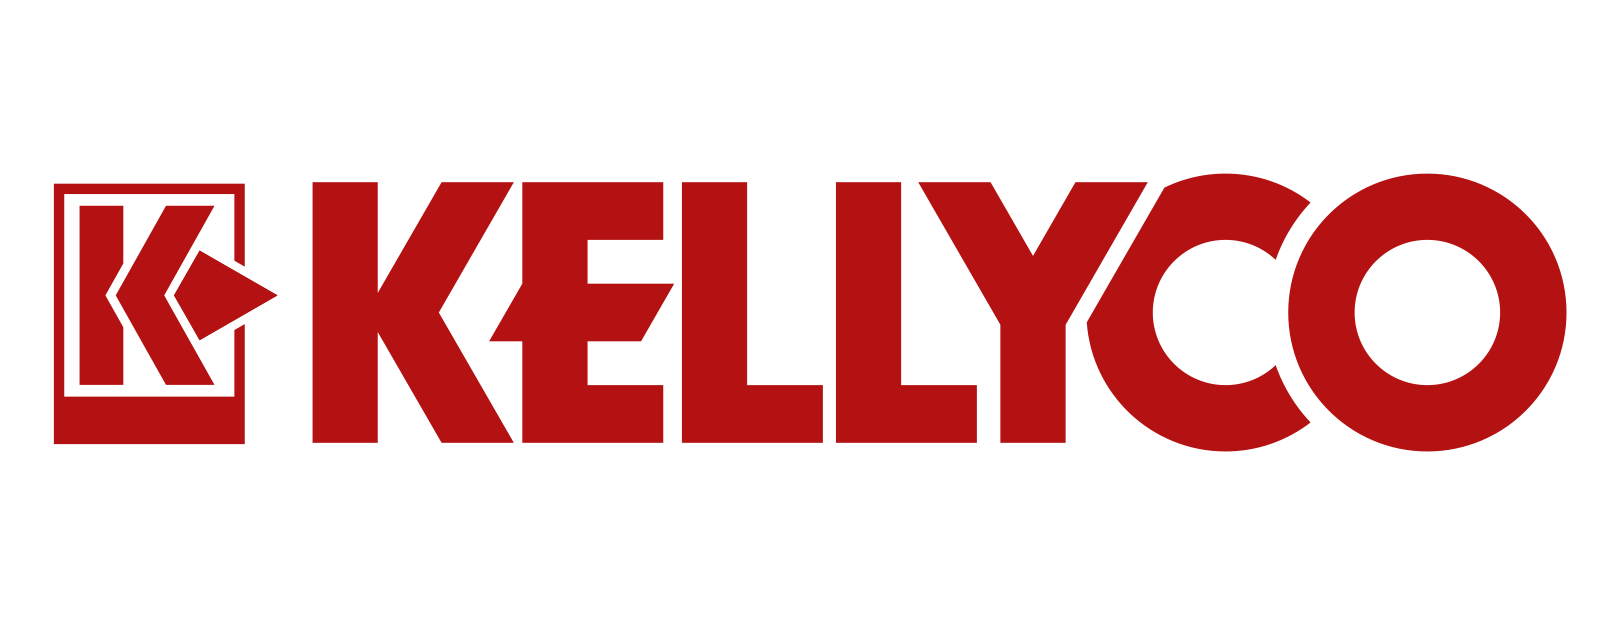 Kellyco Metal Detectors logo